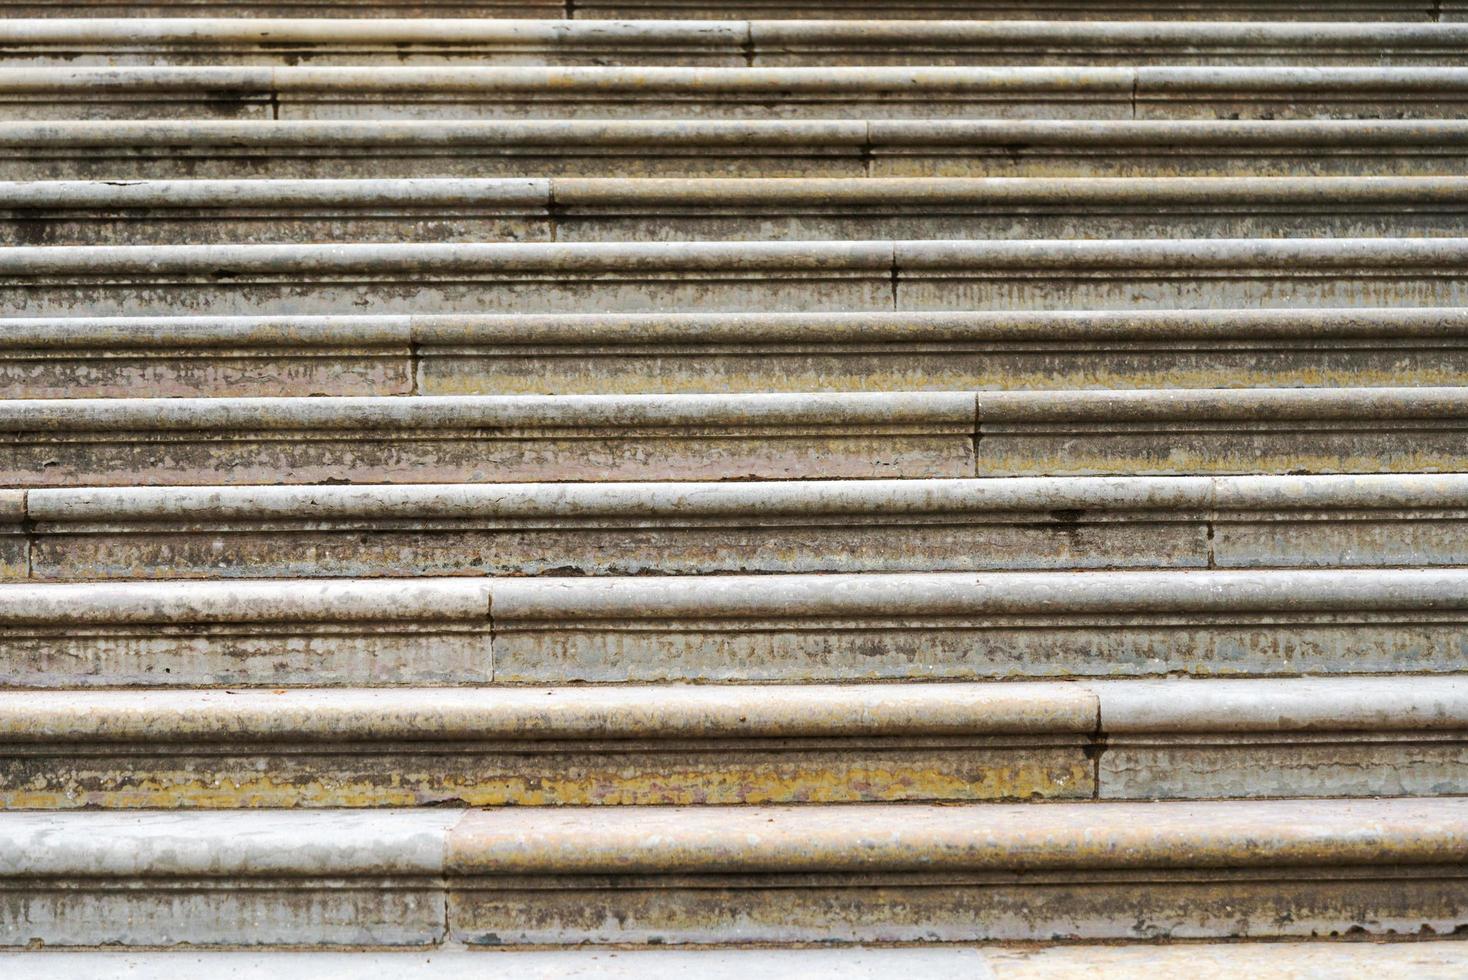 trap. abstracte stappen. trappen in de stad. granieten trappen. stenen trap vaak gezien op monumenten en oriëntatiepunten, brede stenen trappen. foto